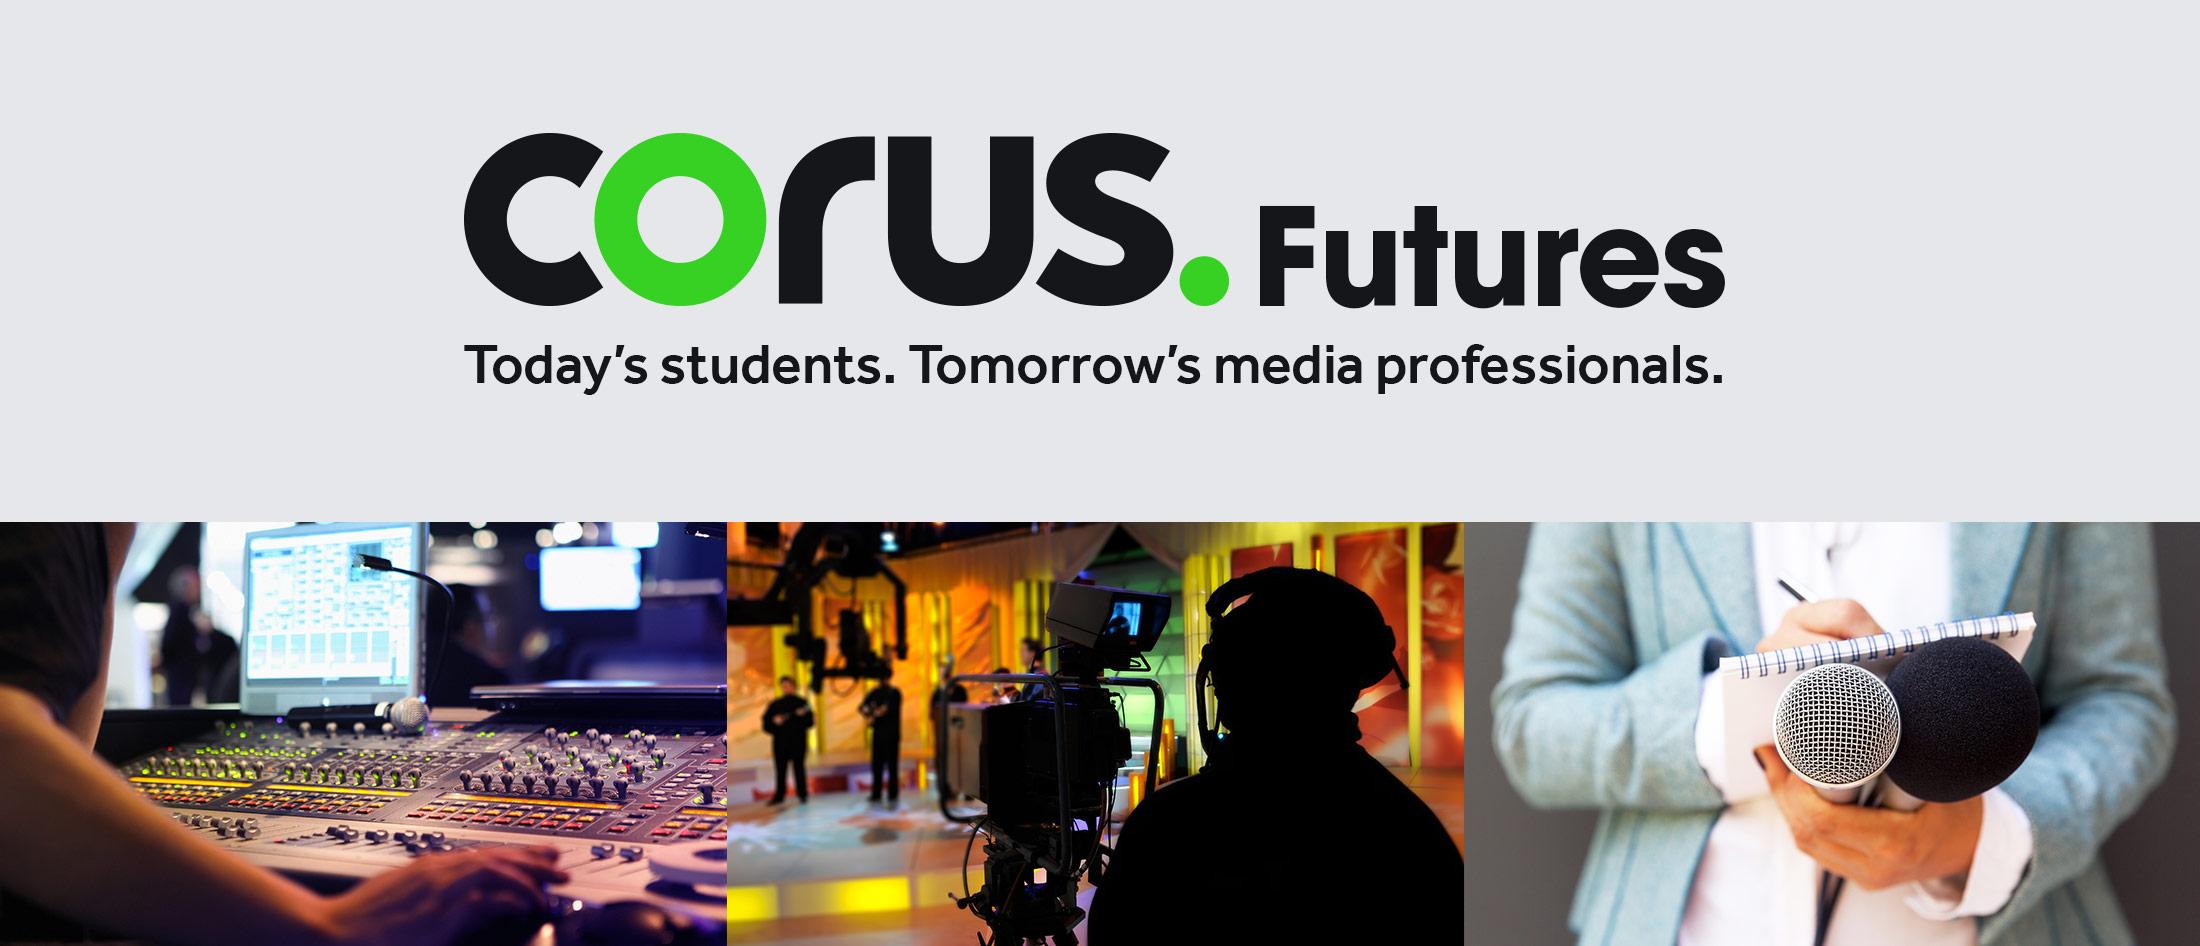 Corus Futures: Scholarship Programs